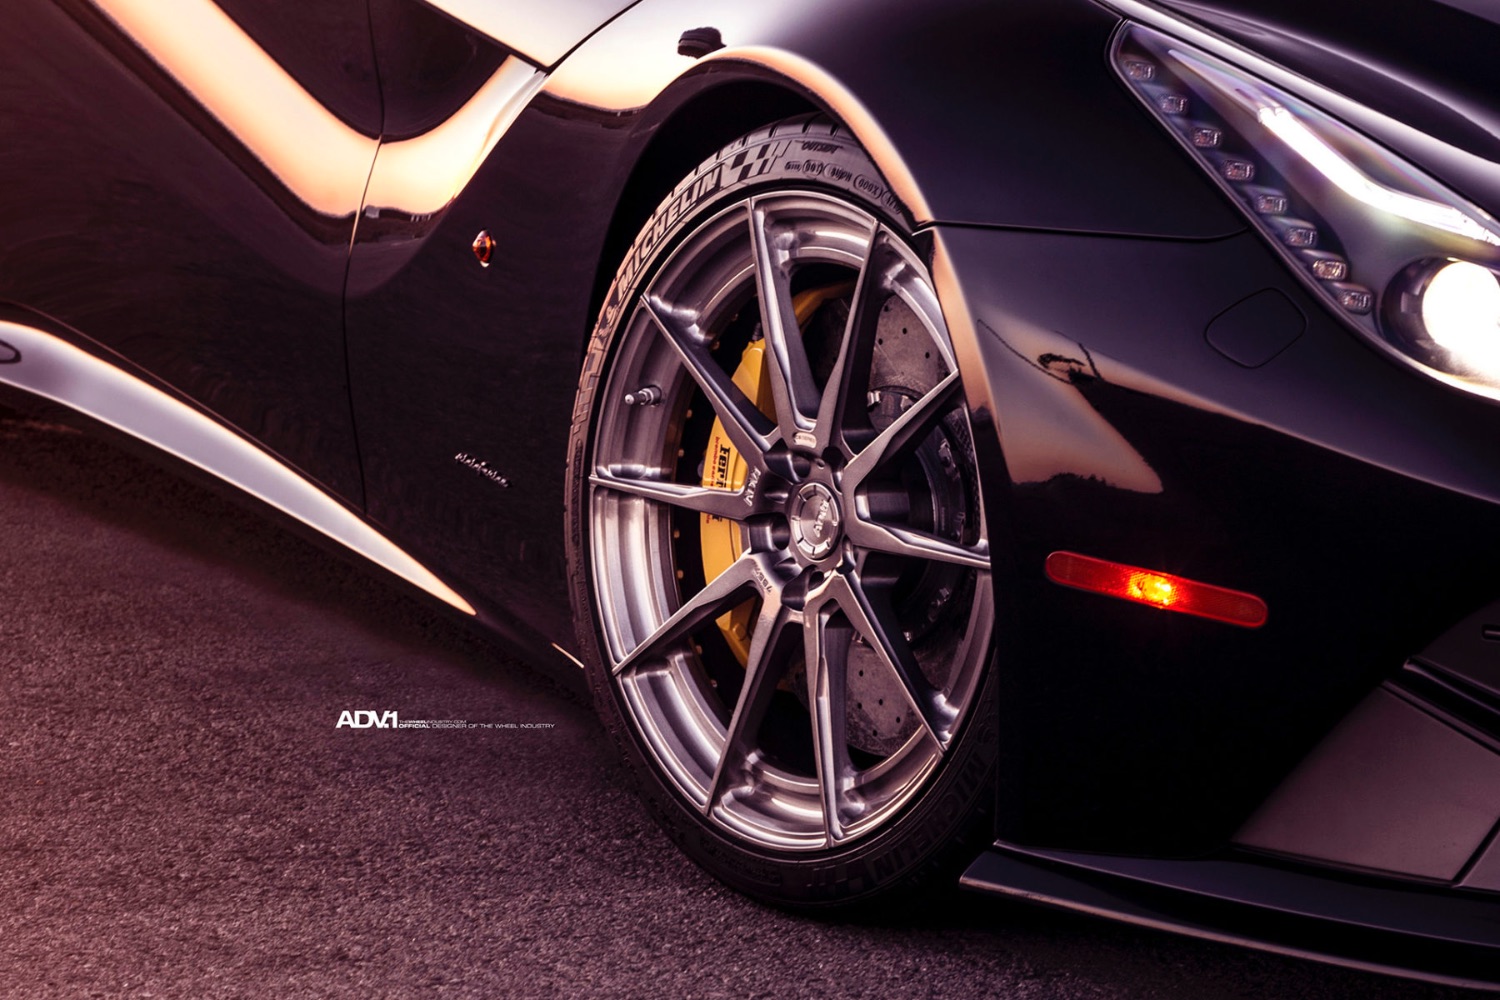 v12-ferrari-f12-berlinetta-forged-wheels-performance-racing-rims-concave-luxury-sports-carm-1